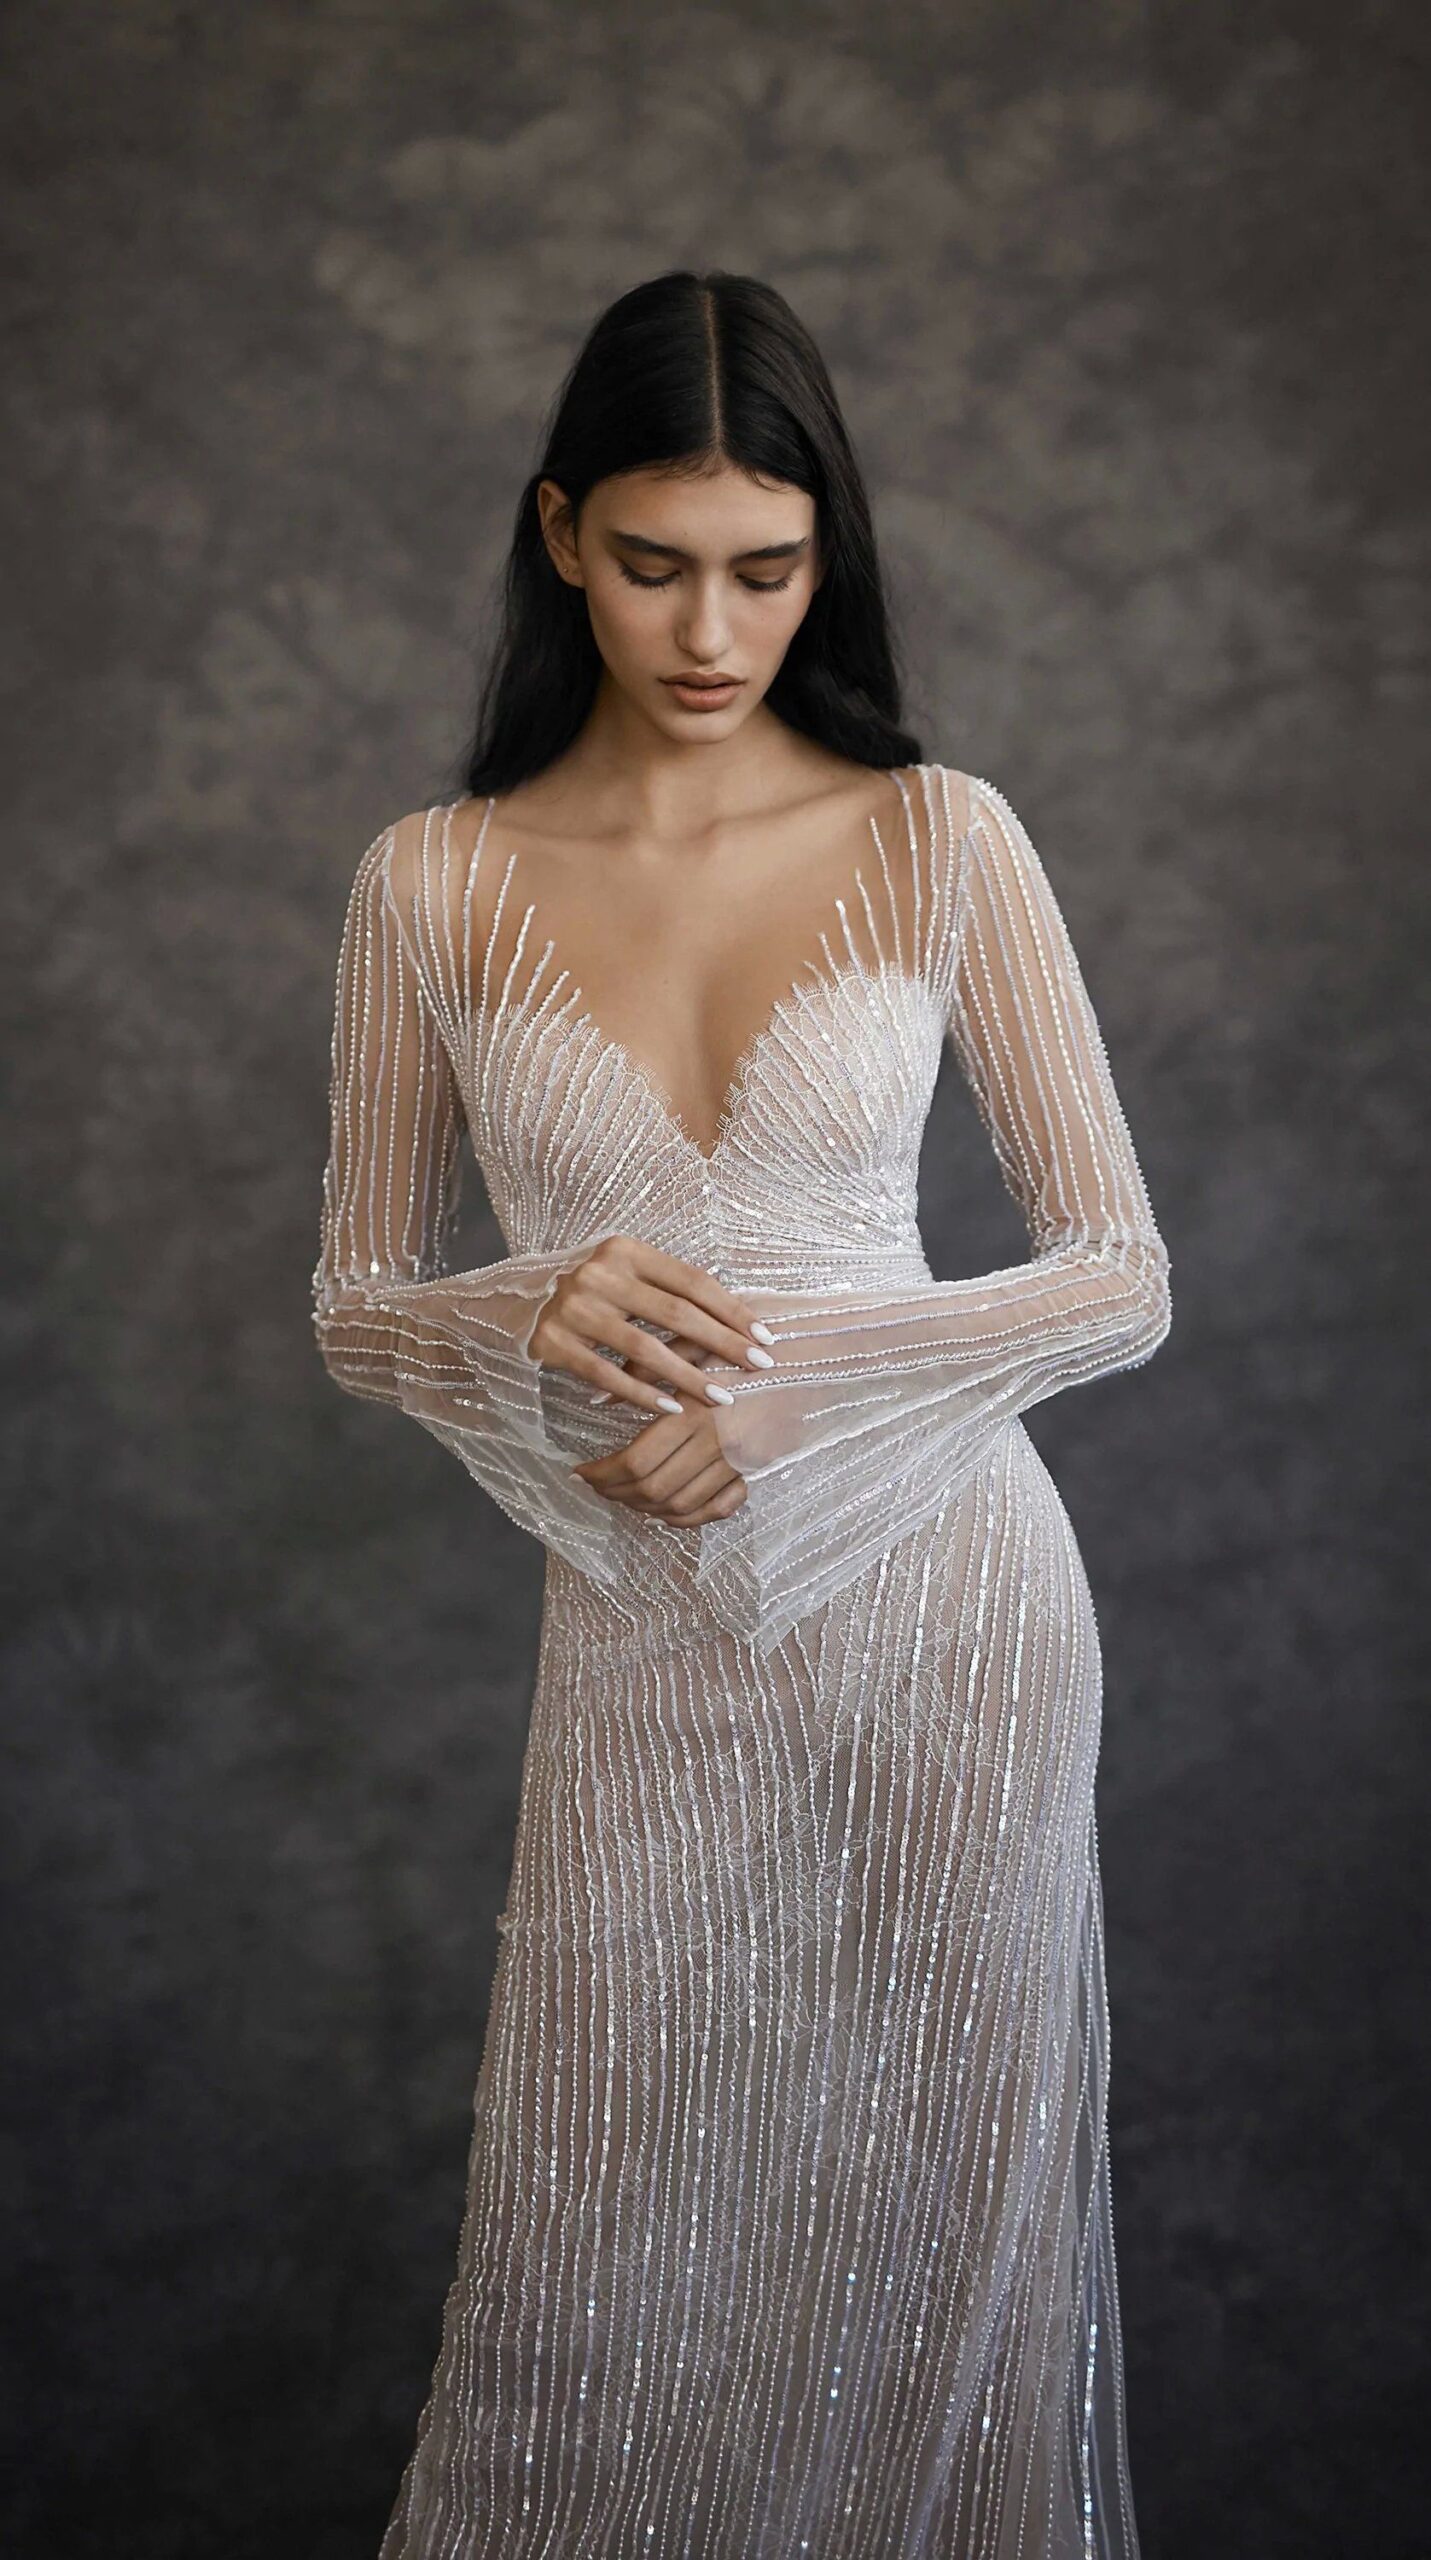 Sparkling Style: Beaded Dress – A Glamorous Choice